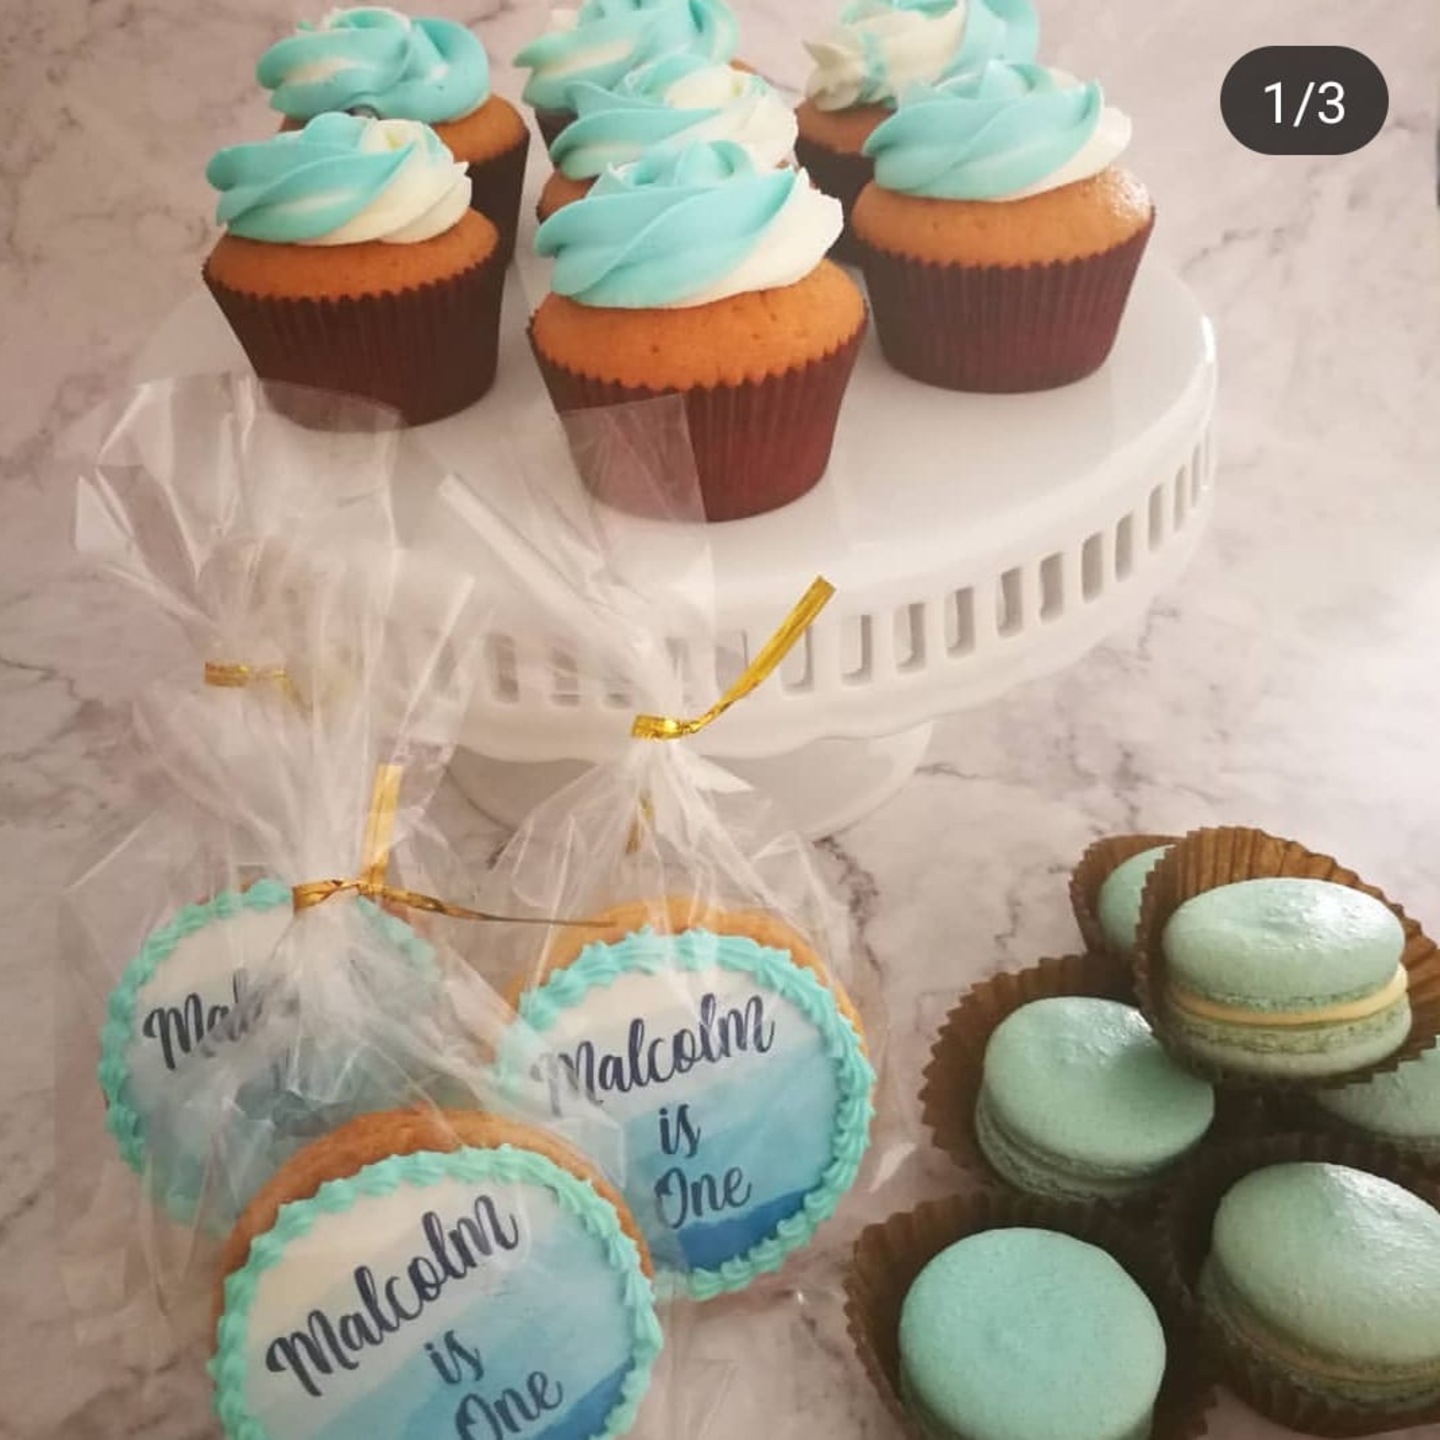 Cupcake with Macaron Party Set